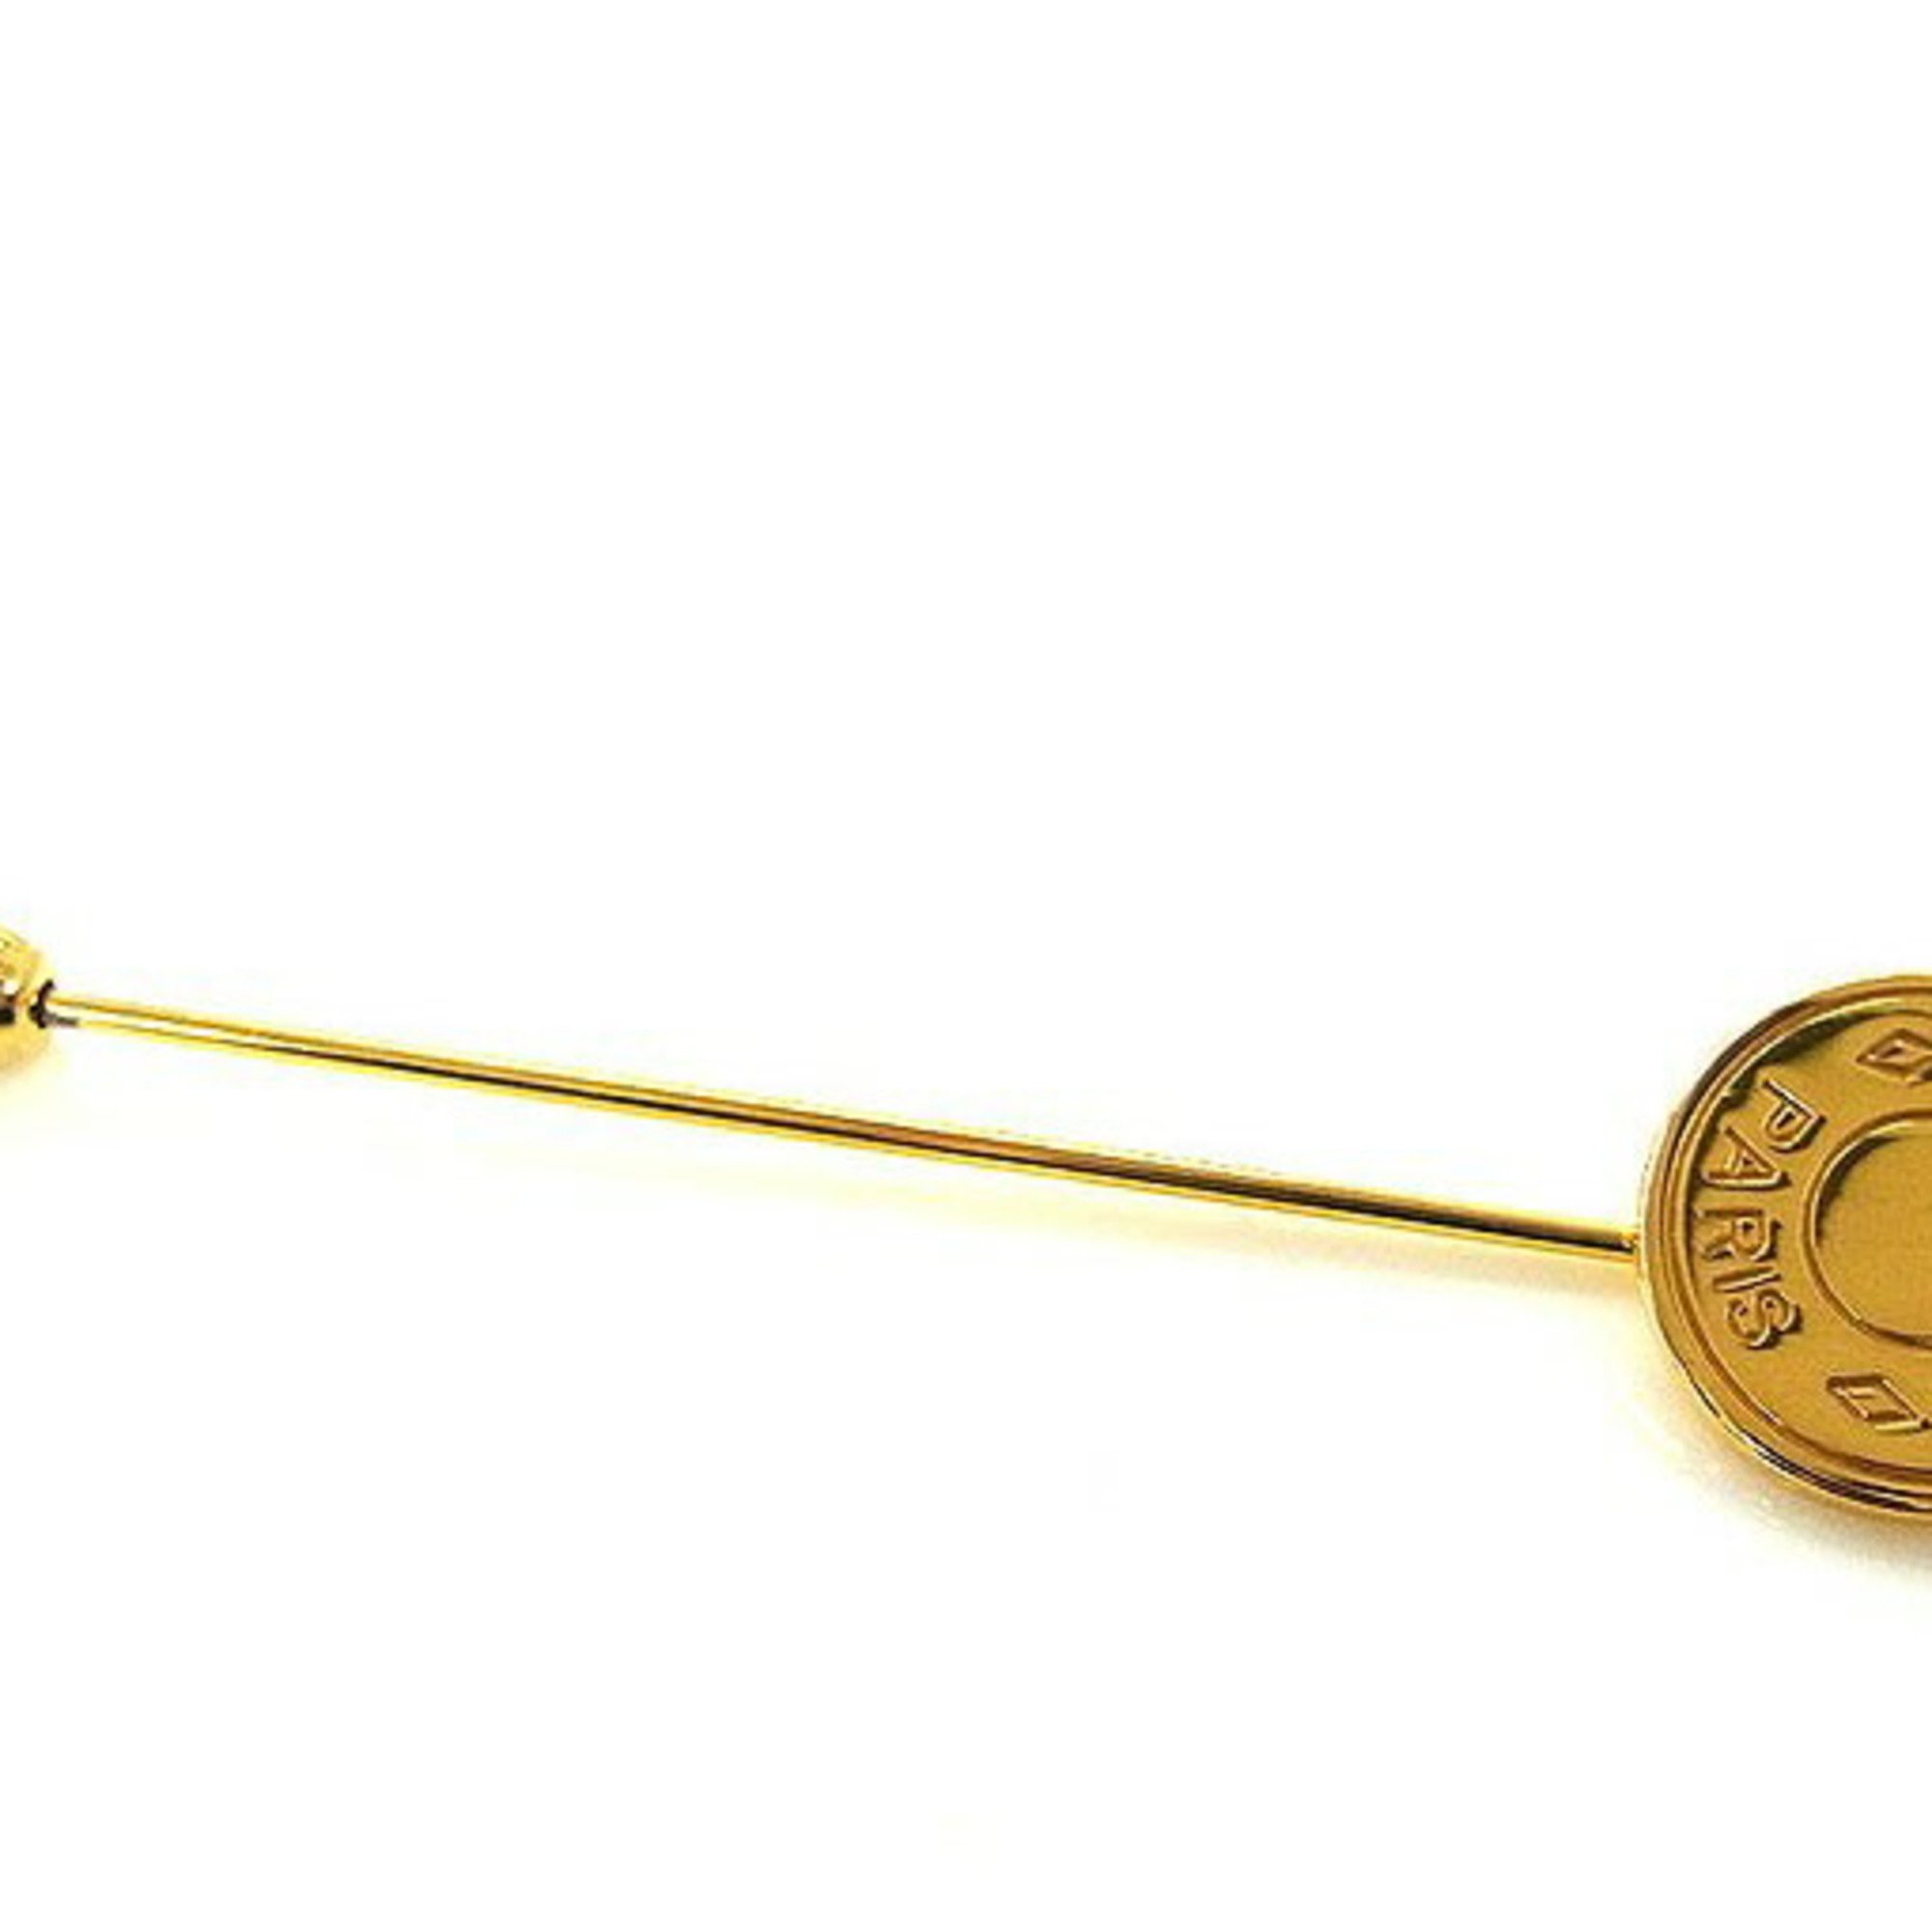 Sale Hermes HERMES pin brooch Serie gold color aq5666